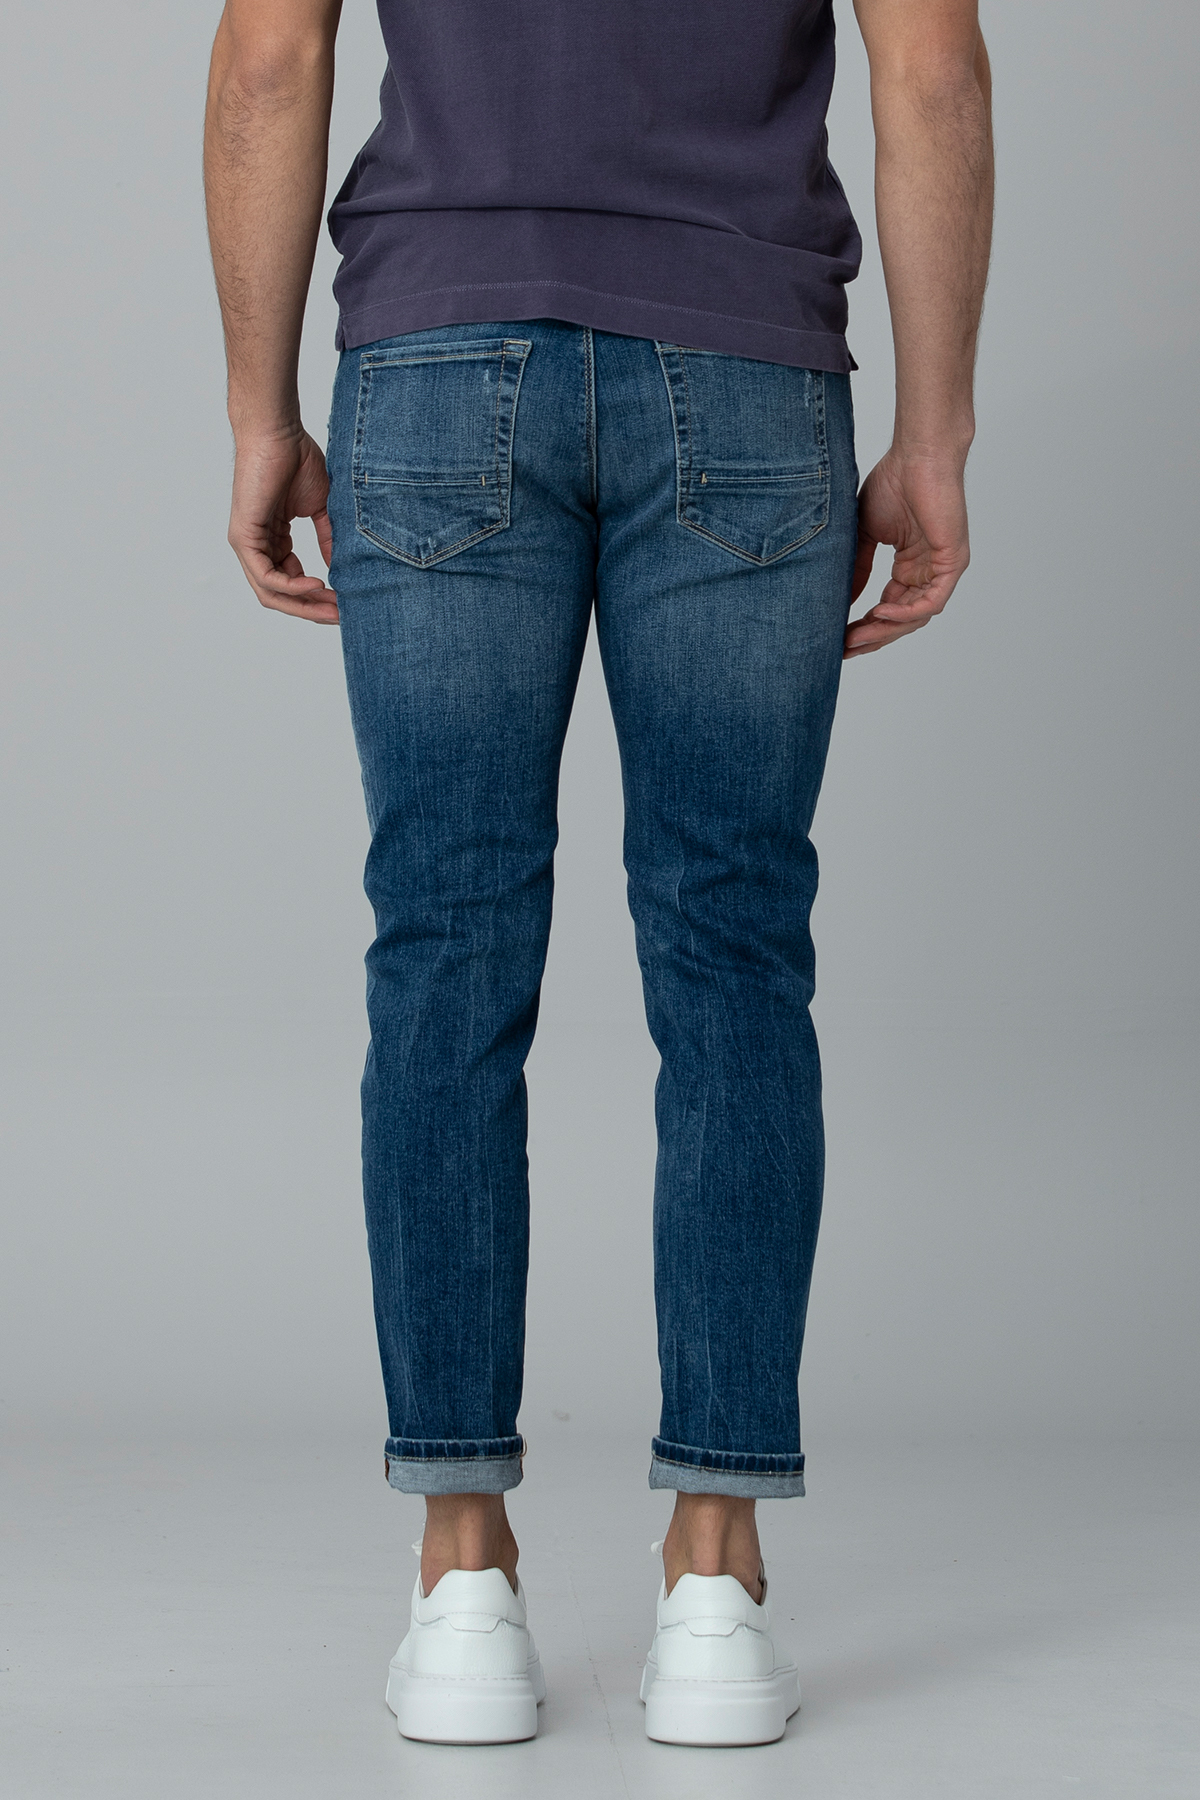 Magıc Fashion Jean Erkek Pantolon Slim Fit Mavi